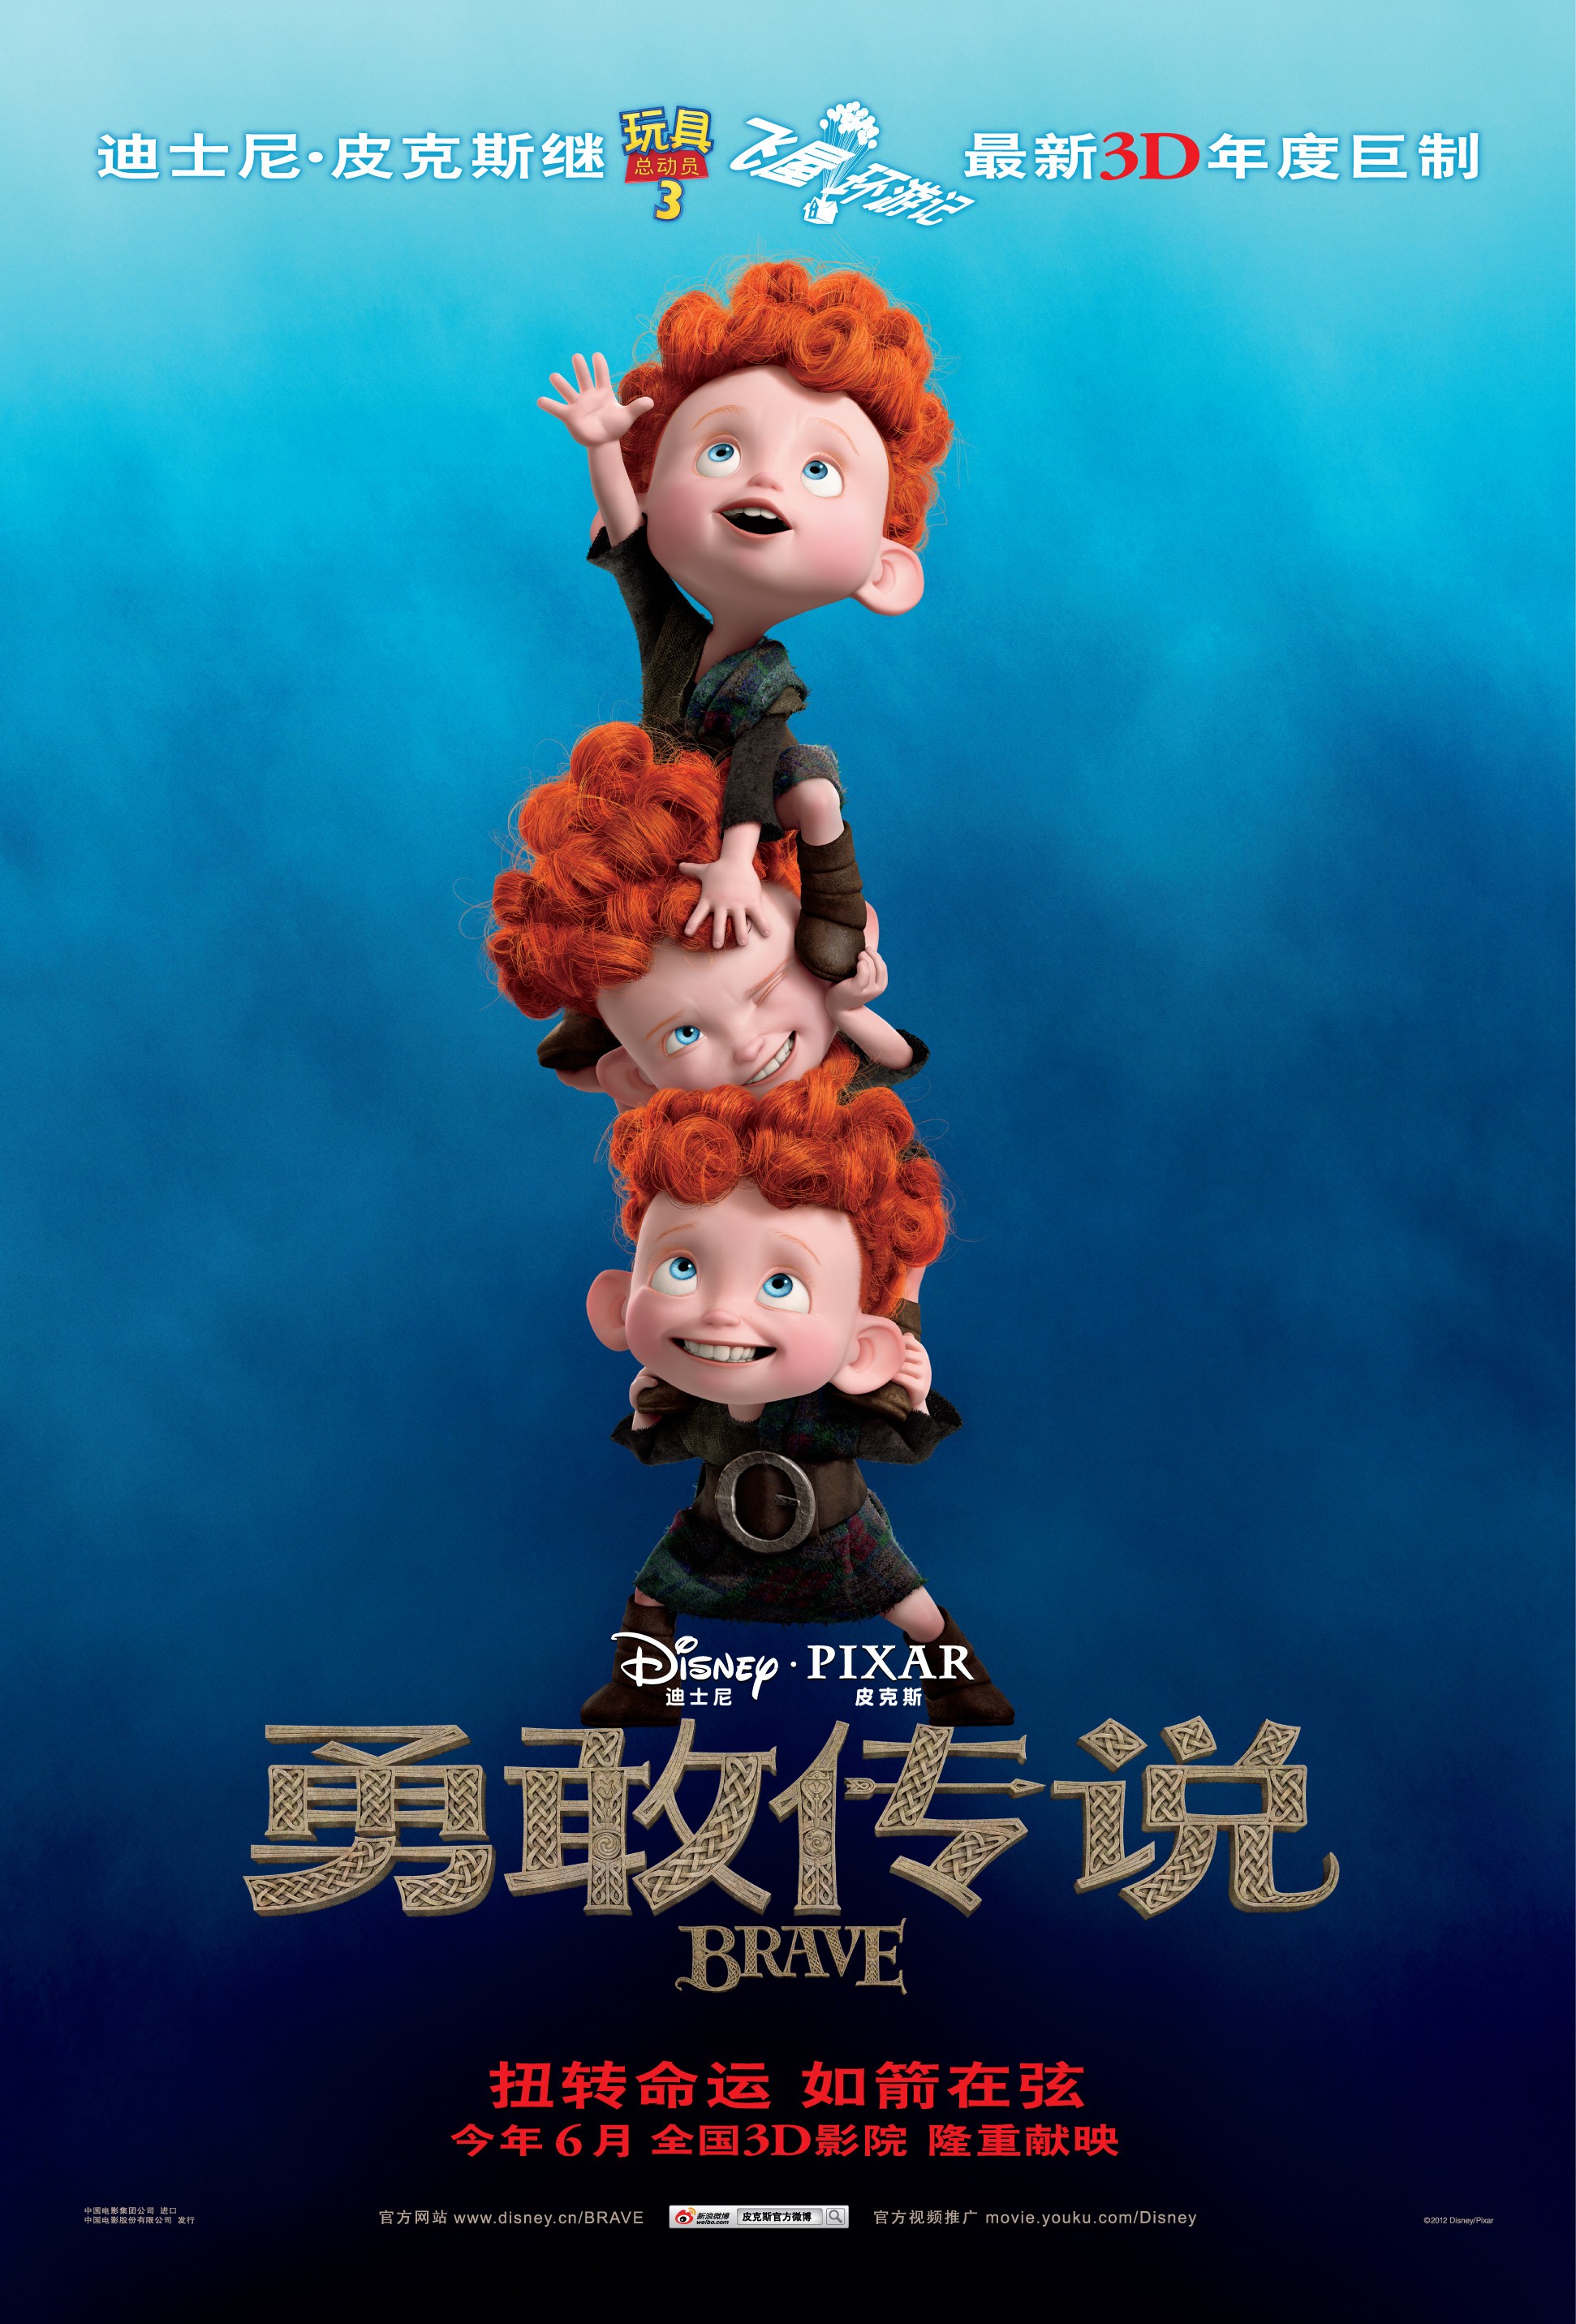 Mega Sized Movie Poster Image for Brave (#8 of 17)